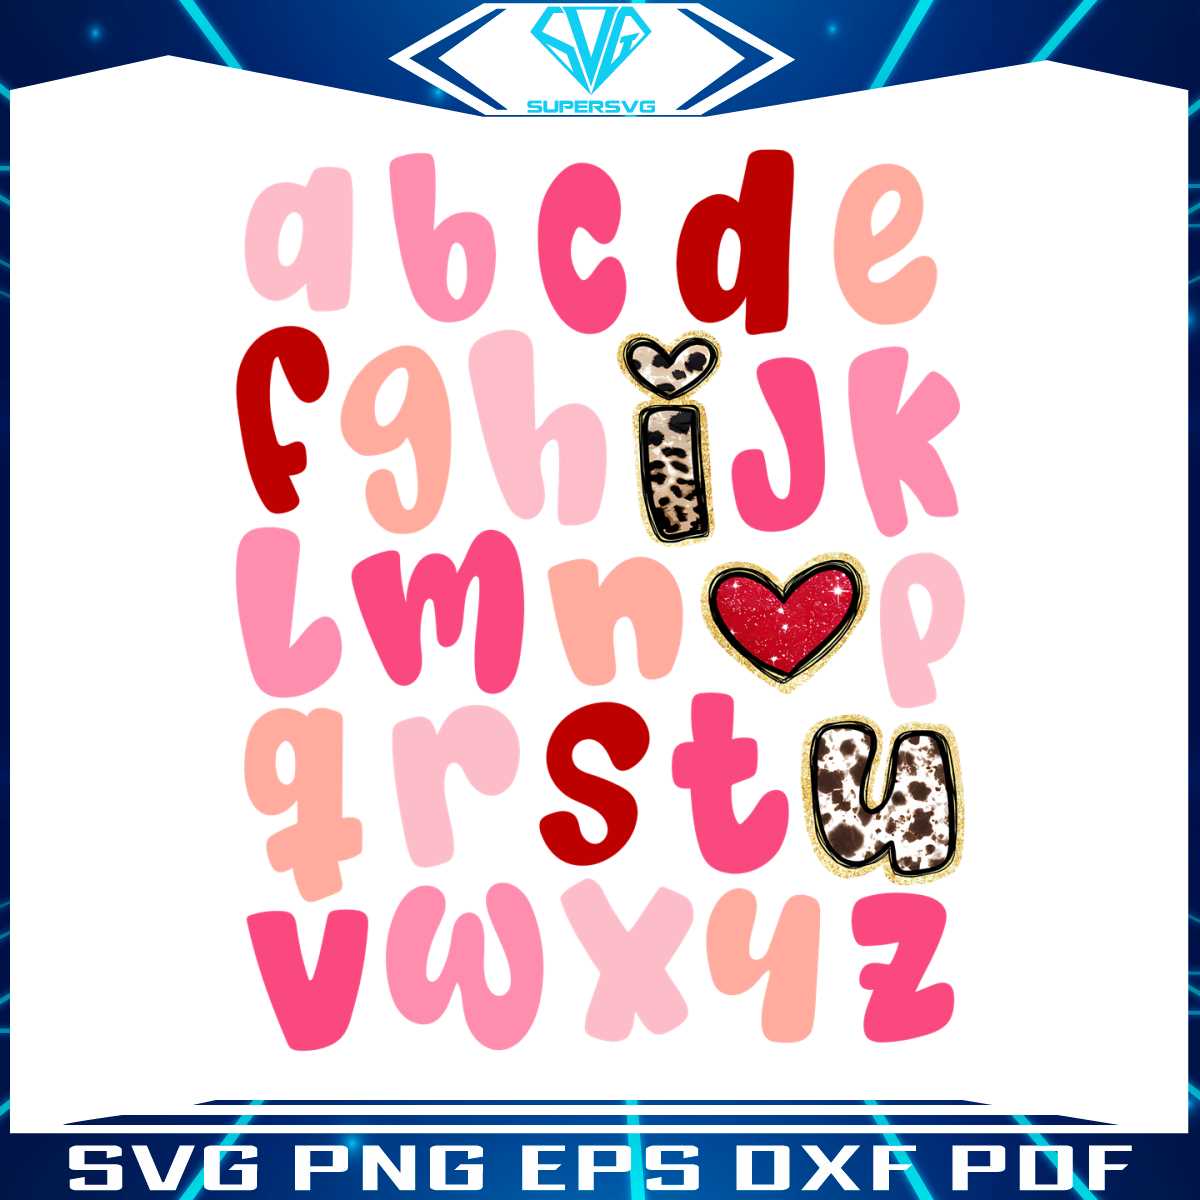 abc-i-love-you-alphabet-valentine-png